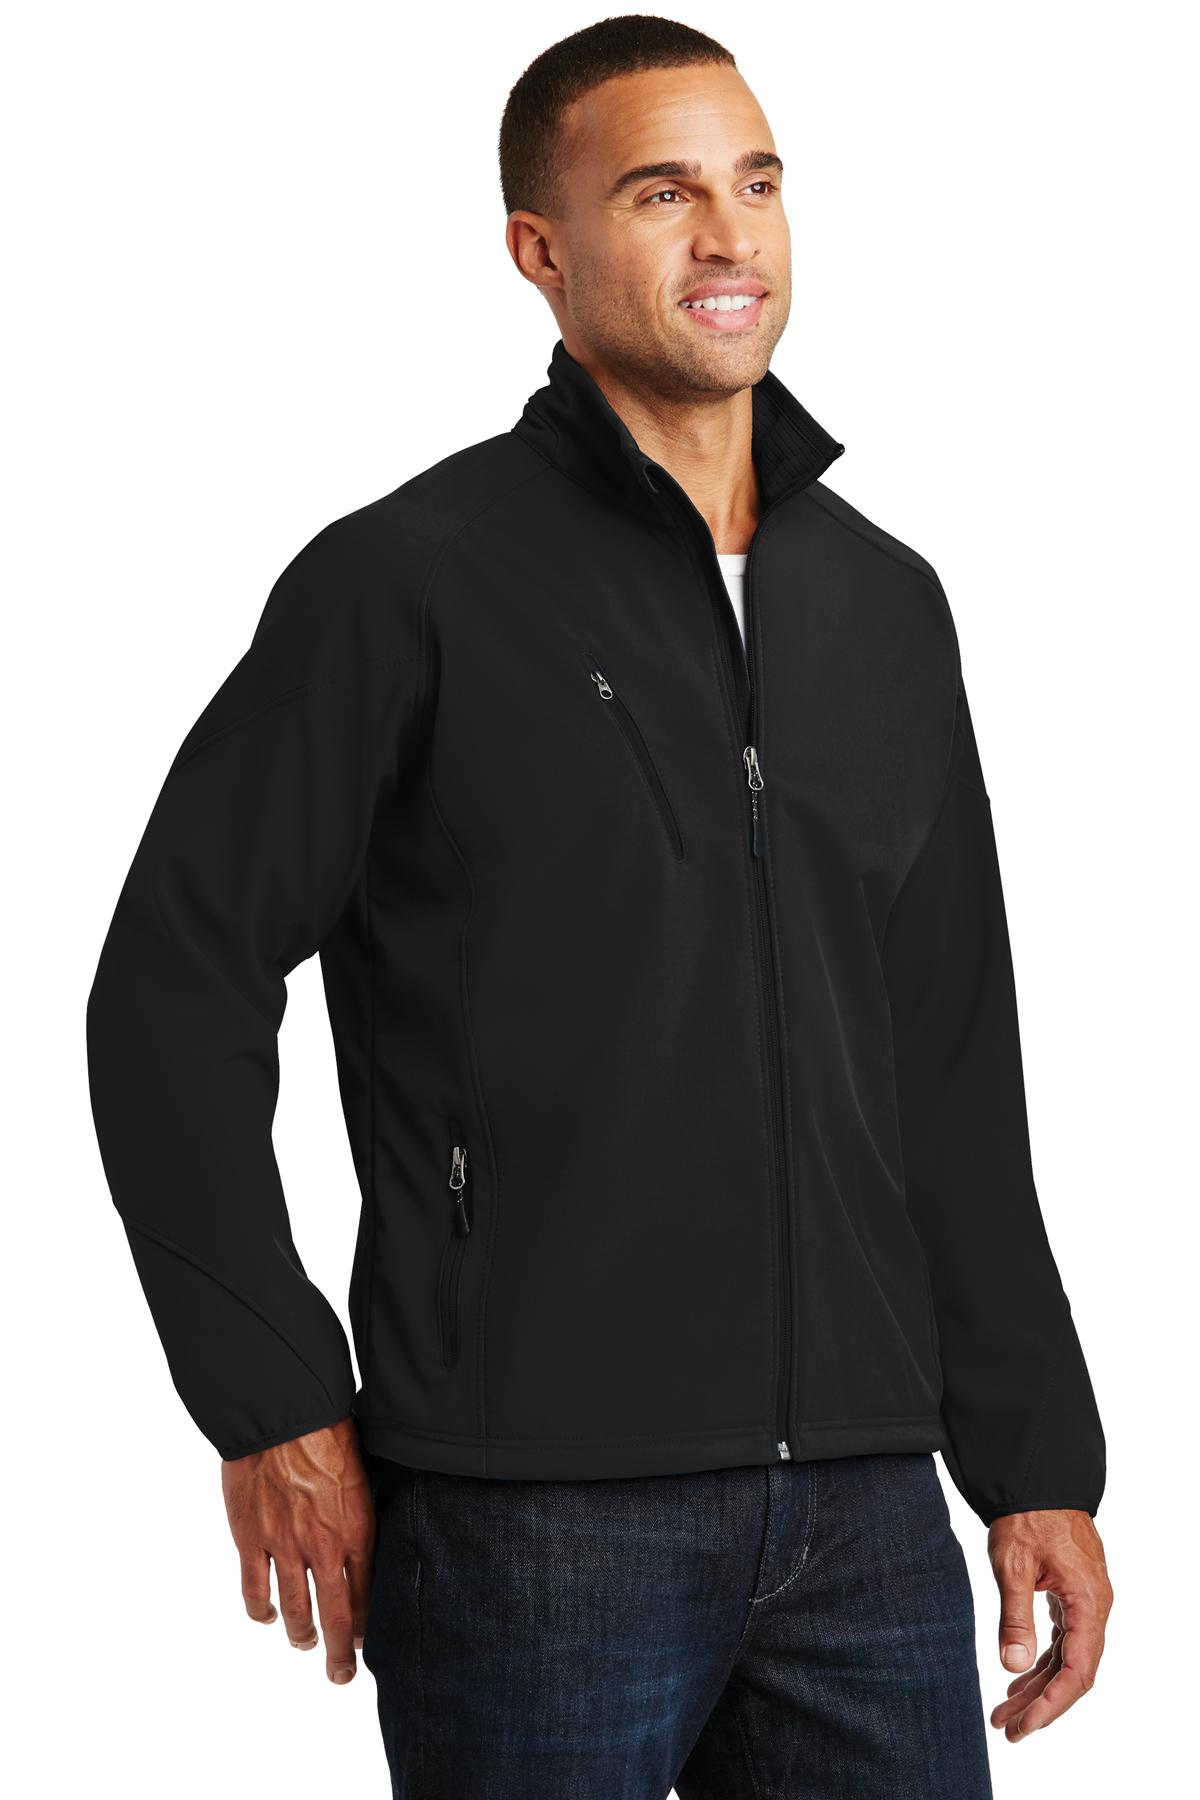 - Black Port Authority Tall Textured Soft Shell Jacket 4XLT